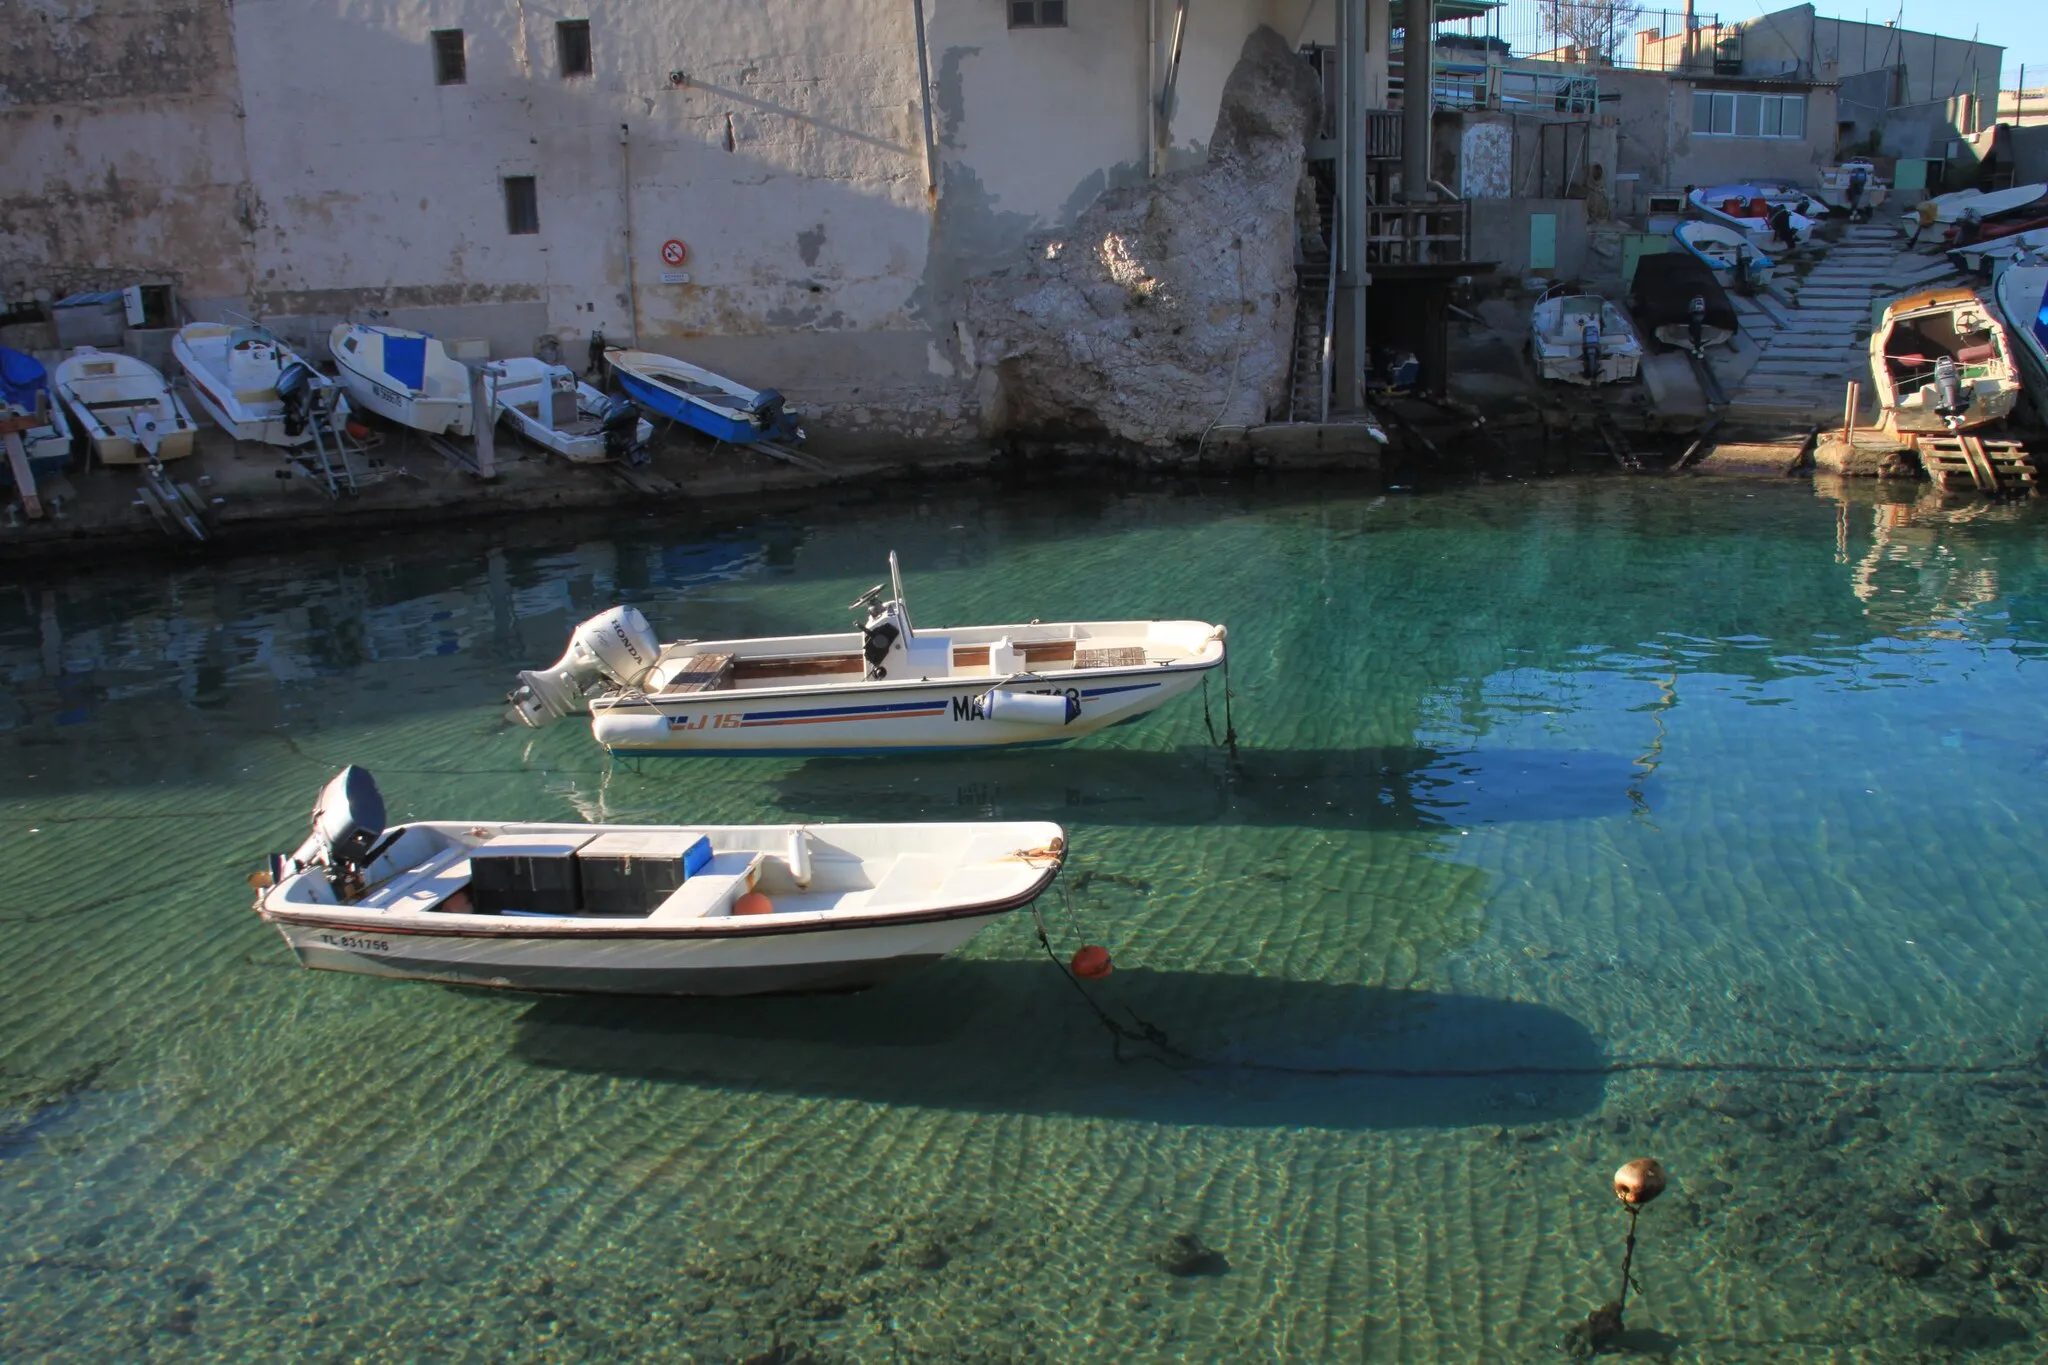 Photo showing: Reflet d'ombre de bateaux, Anse de Malmousque, matin 1er janvier, Marseille

Water shadow reflection on the sea